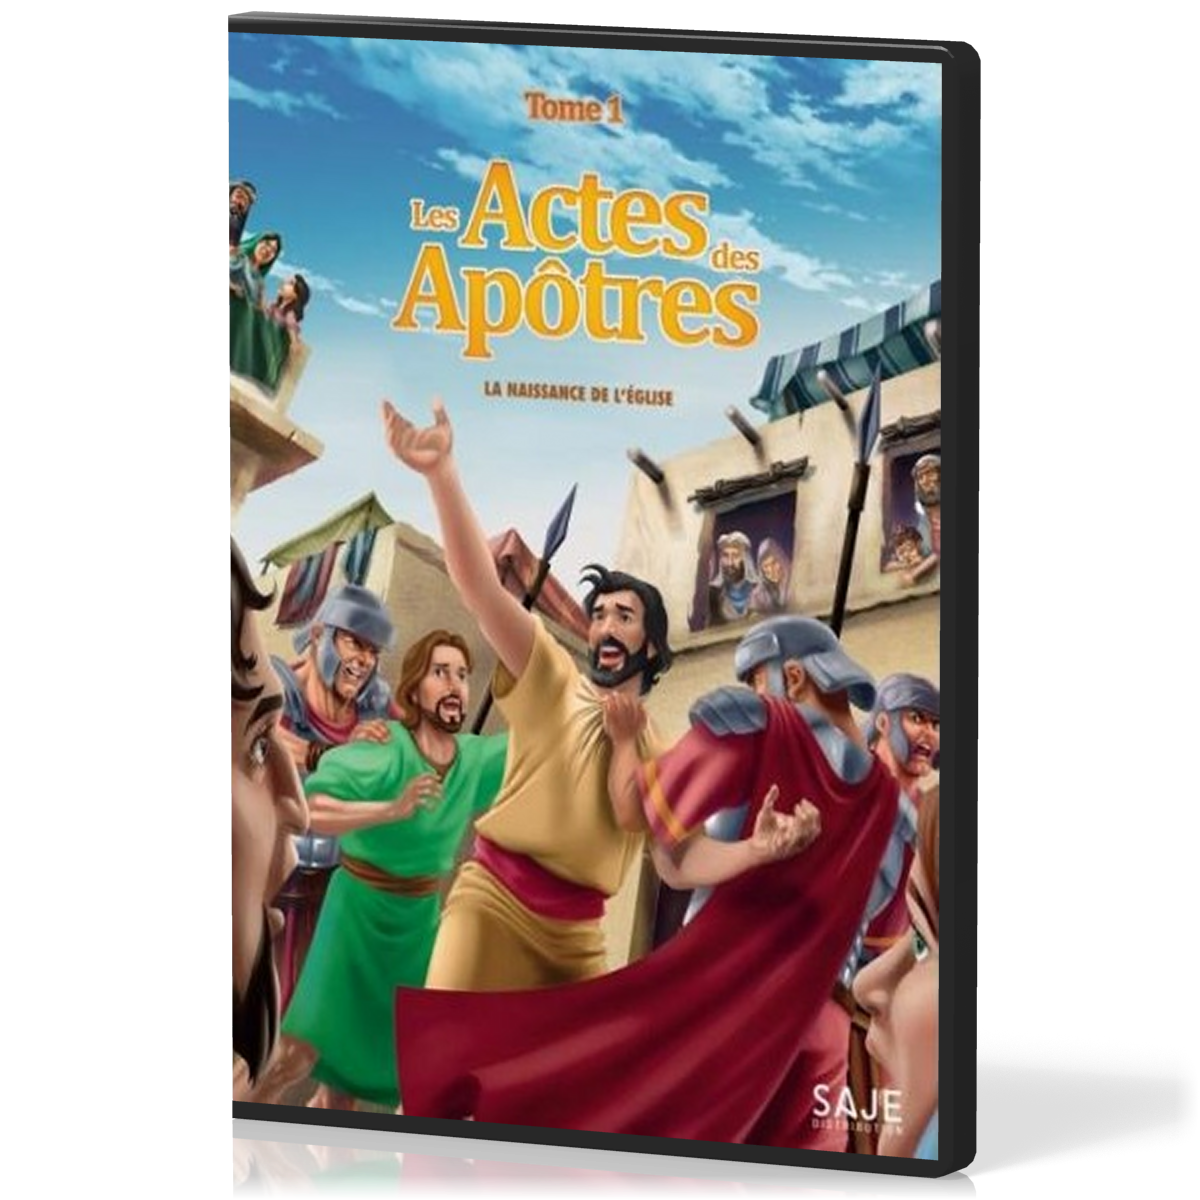 Actes des Apôtres (Les) - Tome 1 DVD